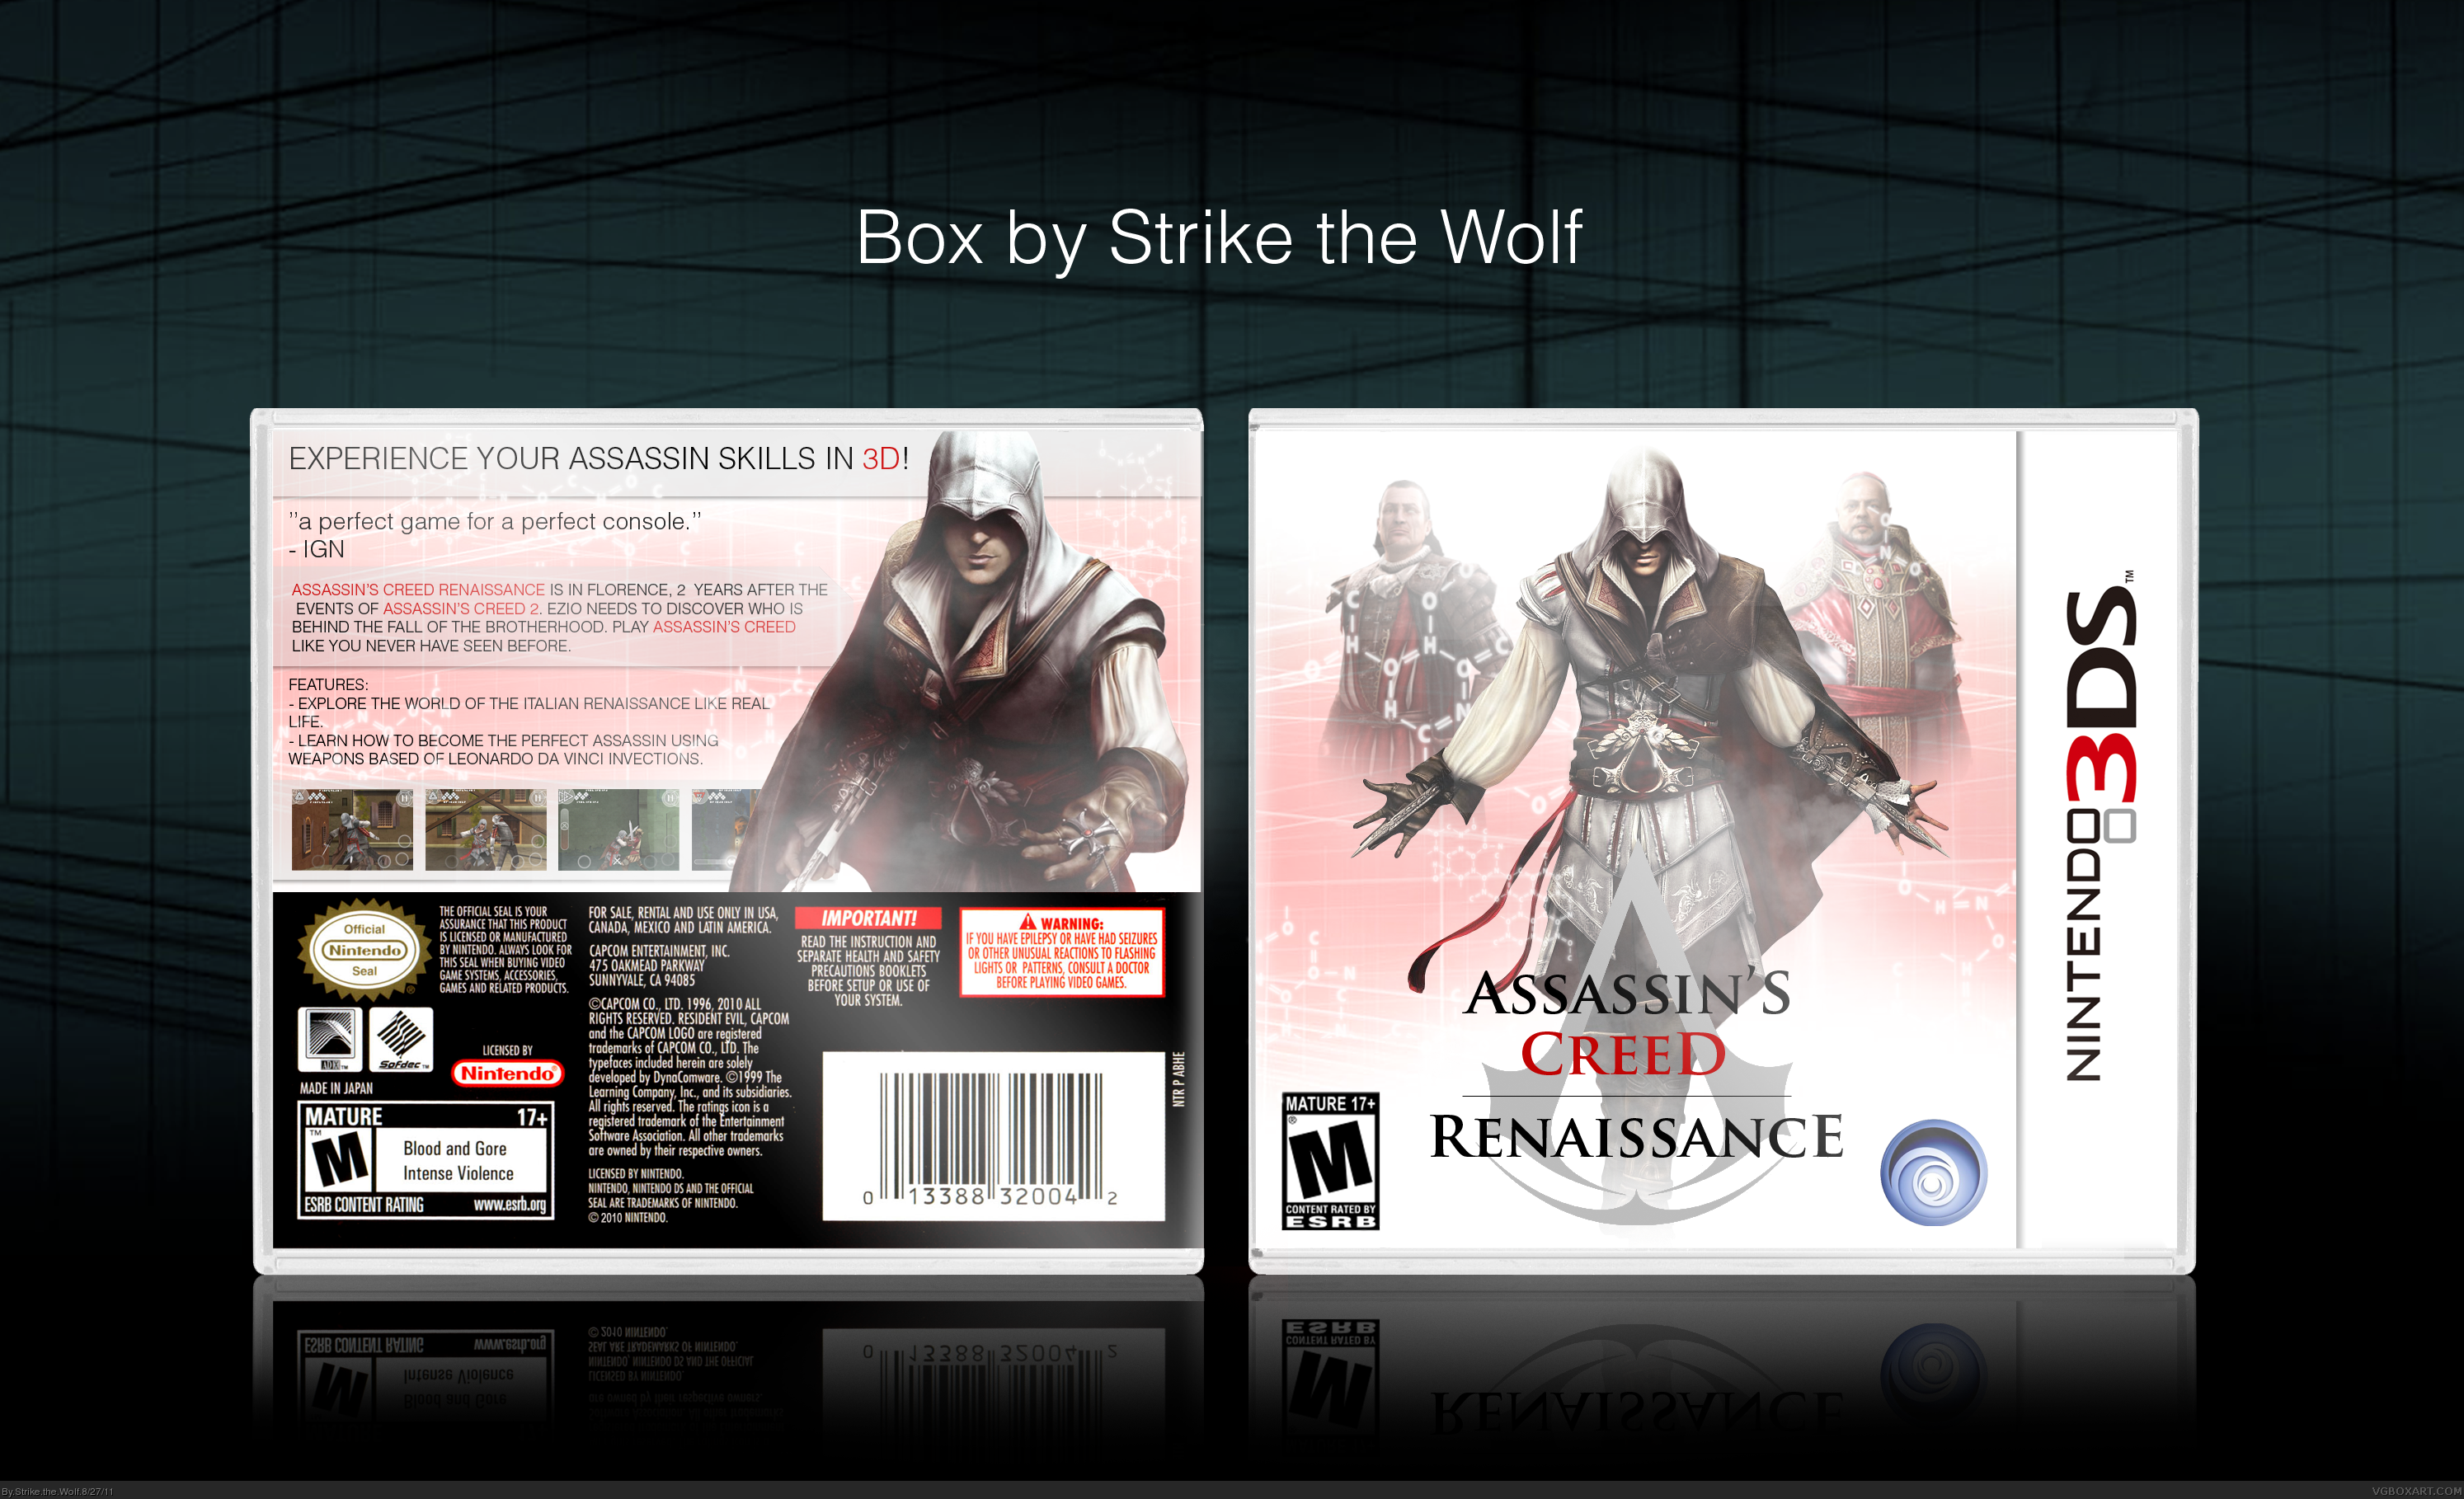 Assassin's Creed Renaissance box cover